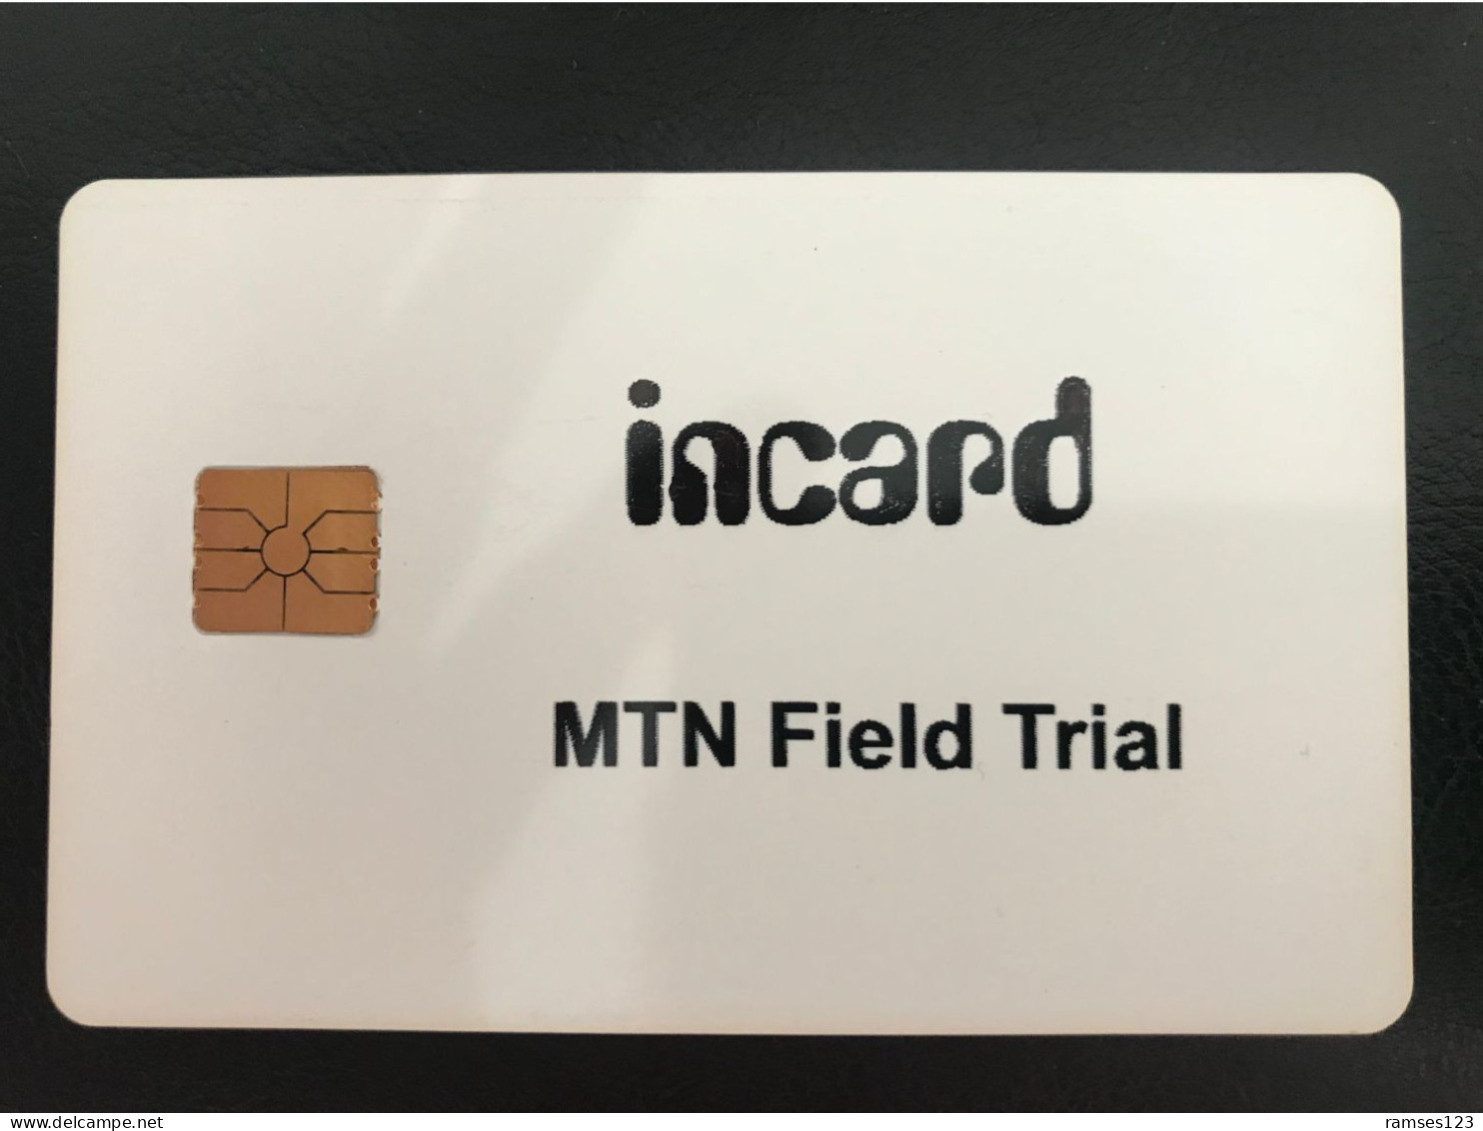 SOUTH AFRICA - Chip - INCARD - MTN Field Trial - VERY RARE - Südafrika